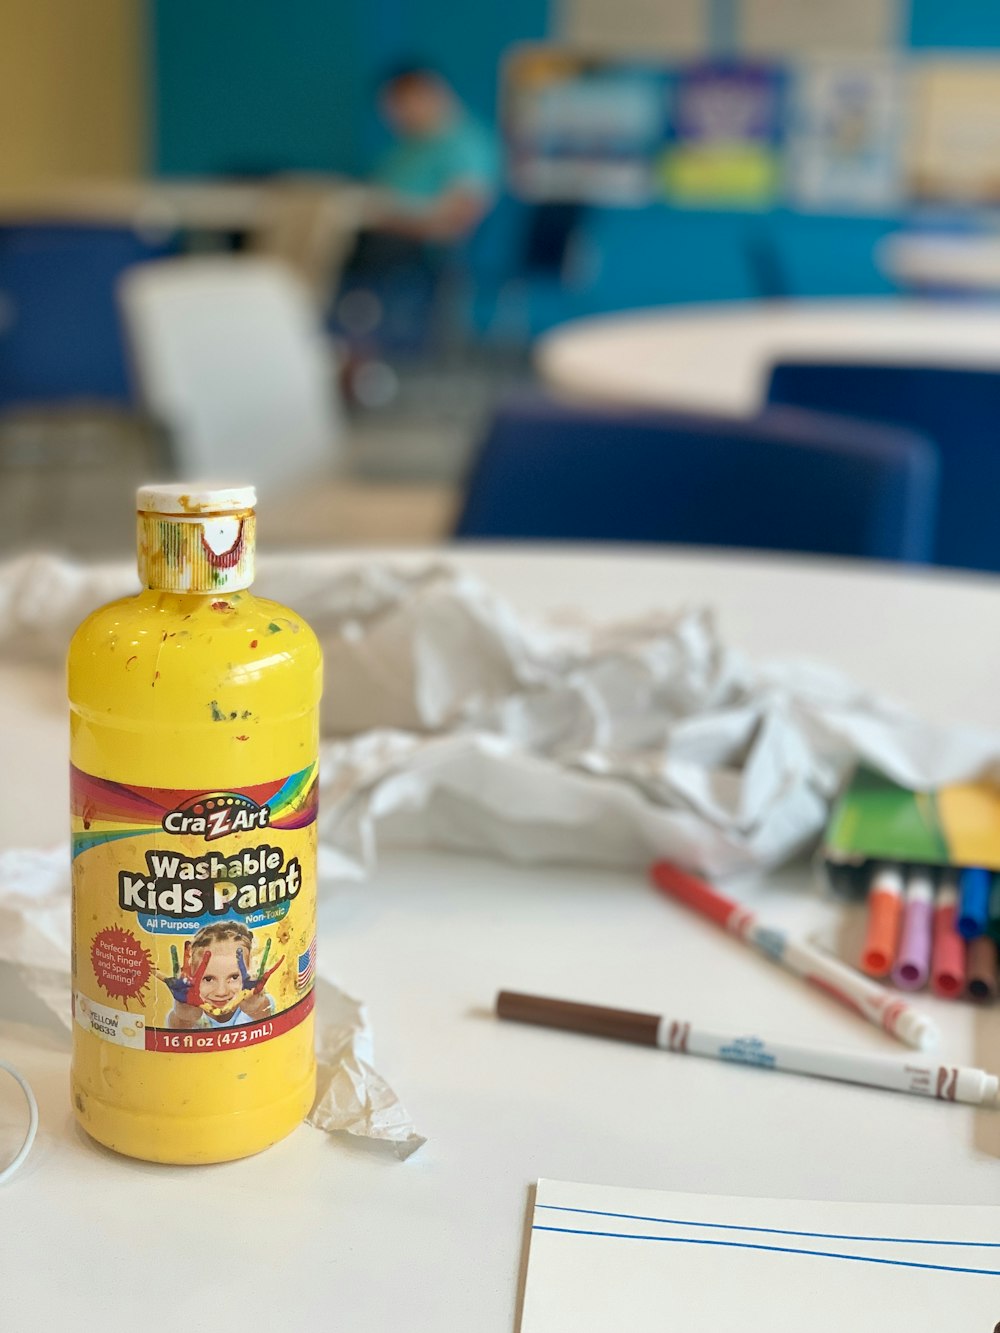 shallow focus photo of yellow Crazart kids paint bottle